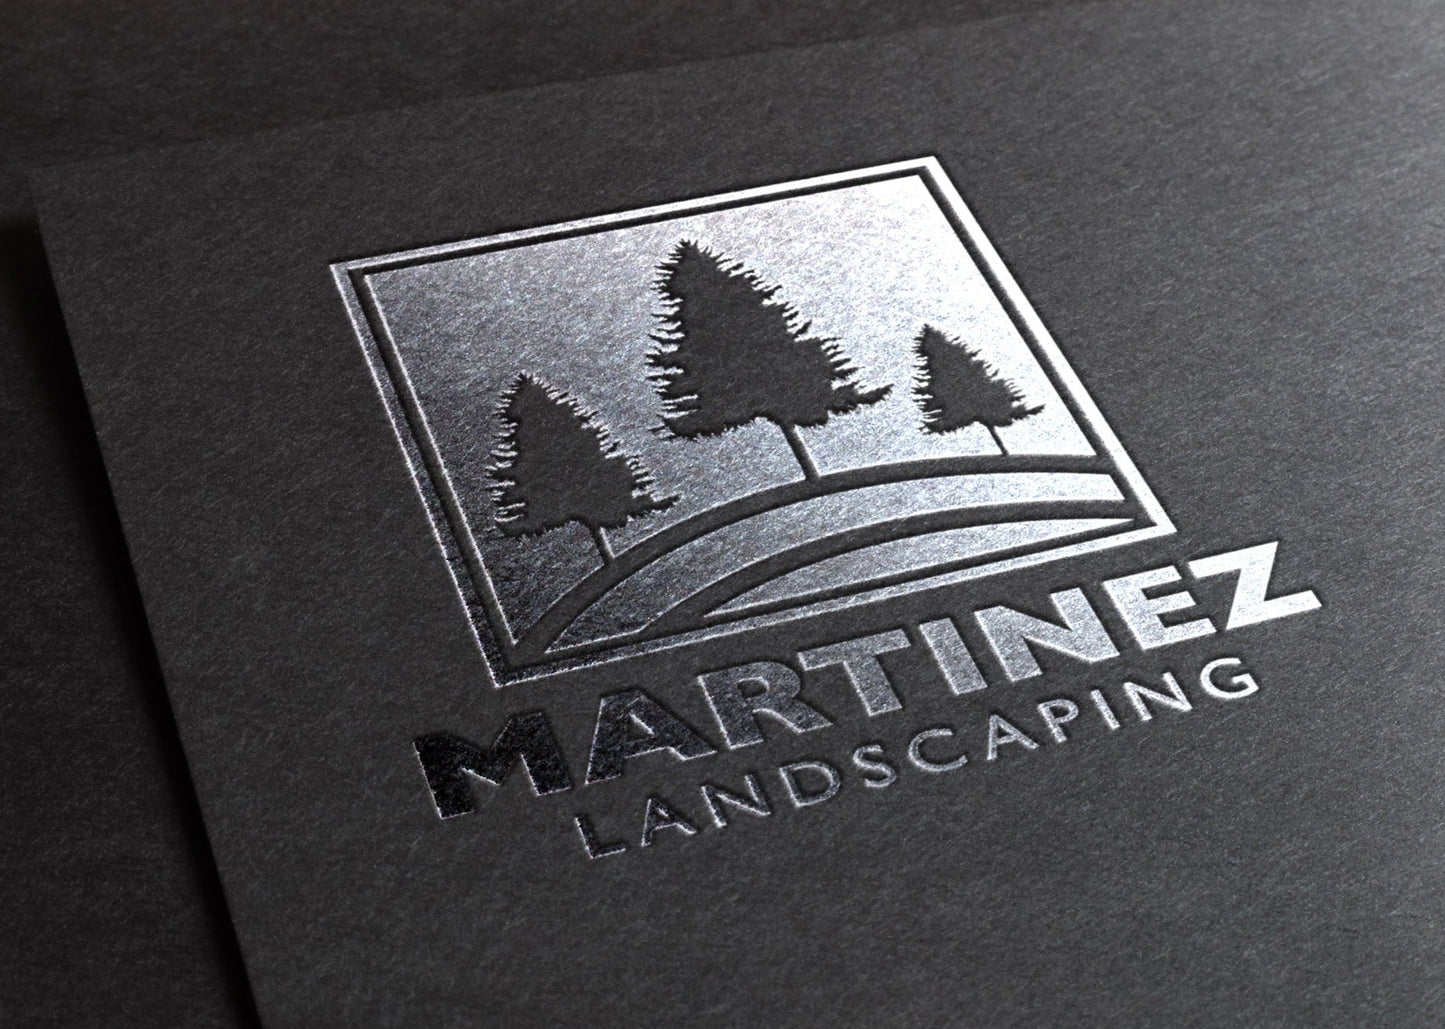 Landscaping Logo Design | Pine Tree | Professional Landscaping | Landscaping Business | Lawn Care Business | Company | Lawn Maintenance Logo